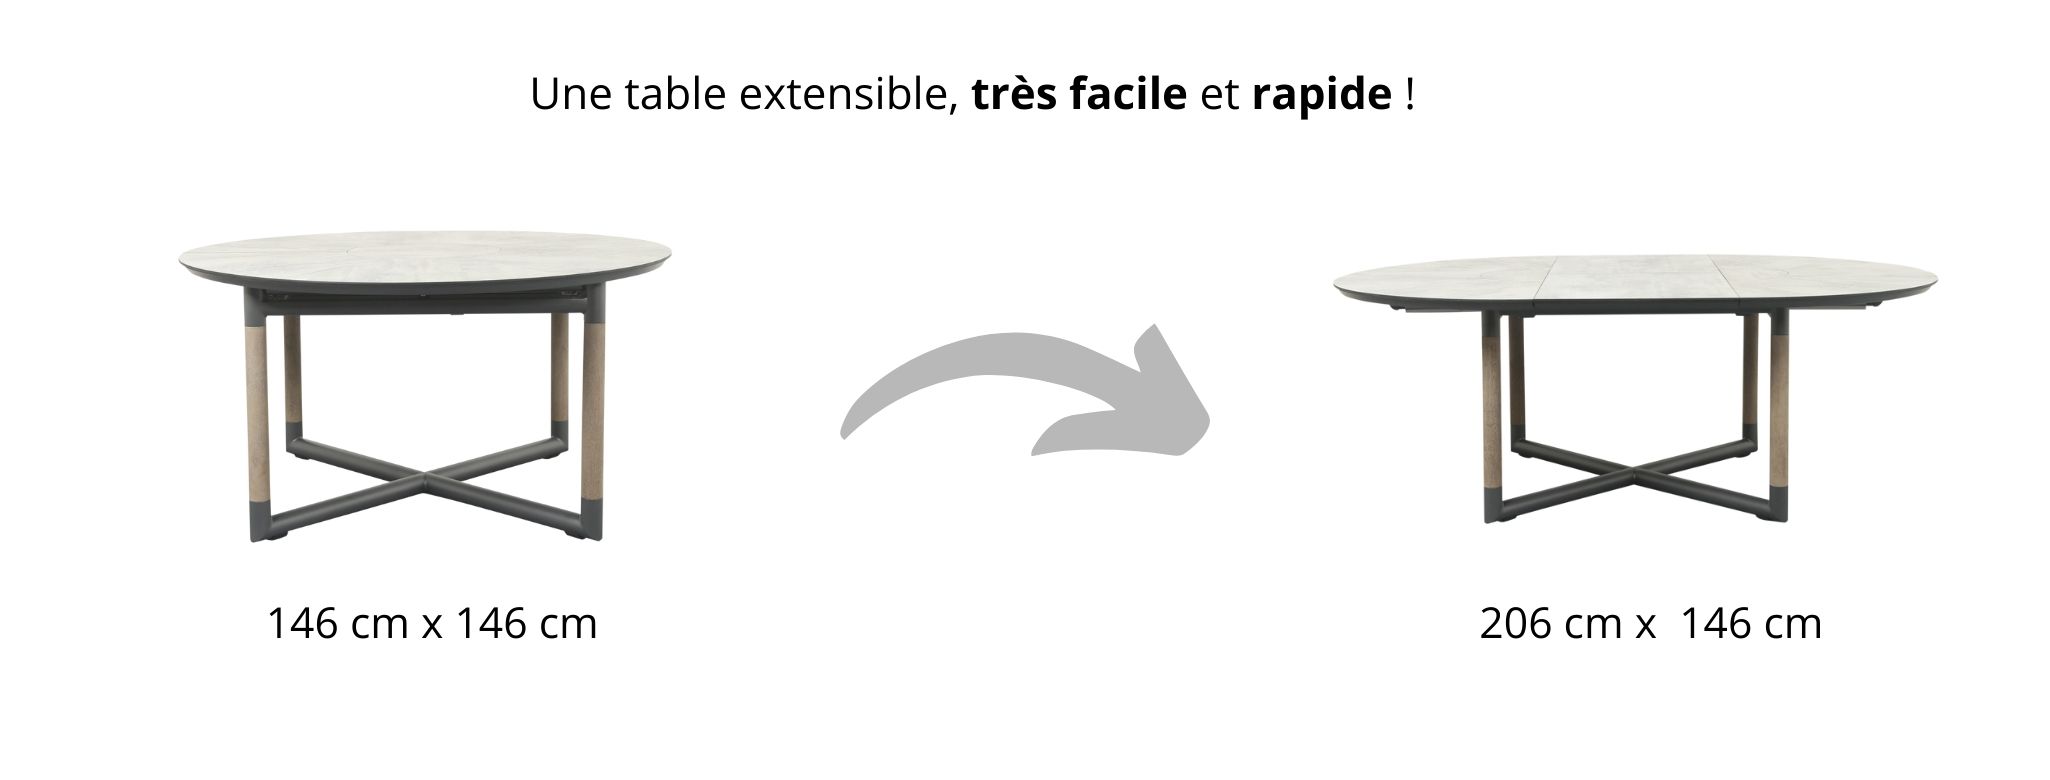 Table ronde extensible BASTINGAGE - Les Jardins du Sud - Vence